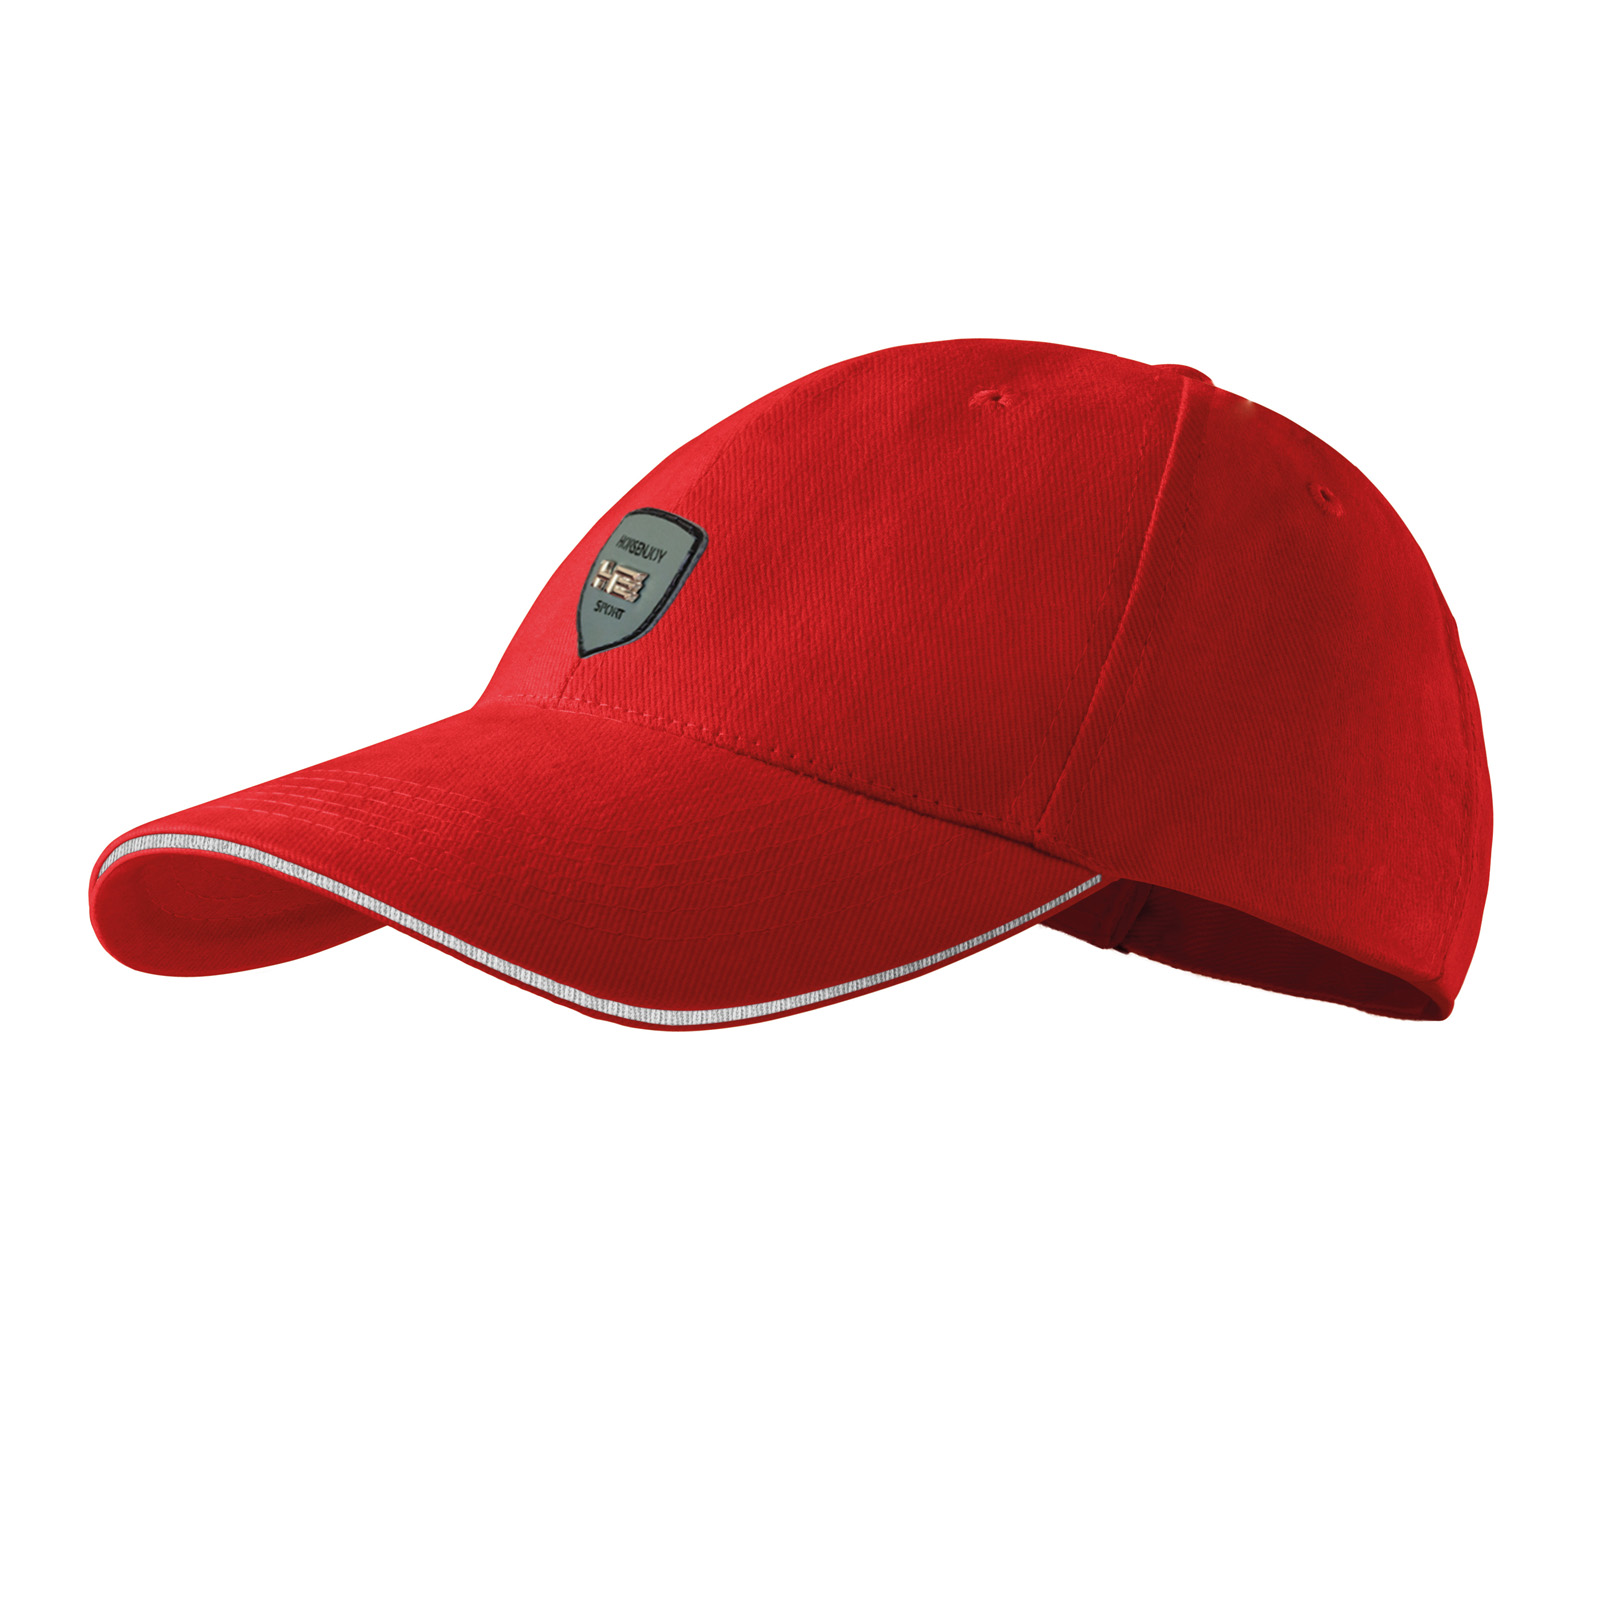 Baseball Kappe Horsenjoy Sport Focus rot | REITER \\ Mützen, Stirnbänder &  Caps \\ Caps | Tytuł sklepu zmienisz w dziale MODERACJA \\ SEO